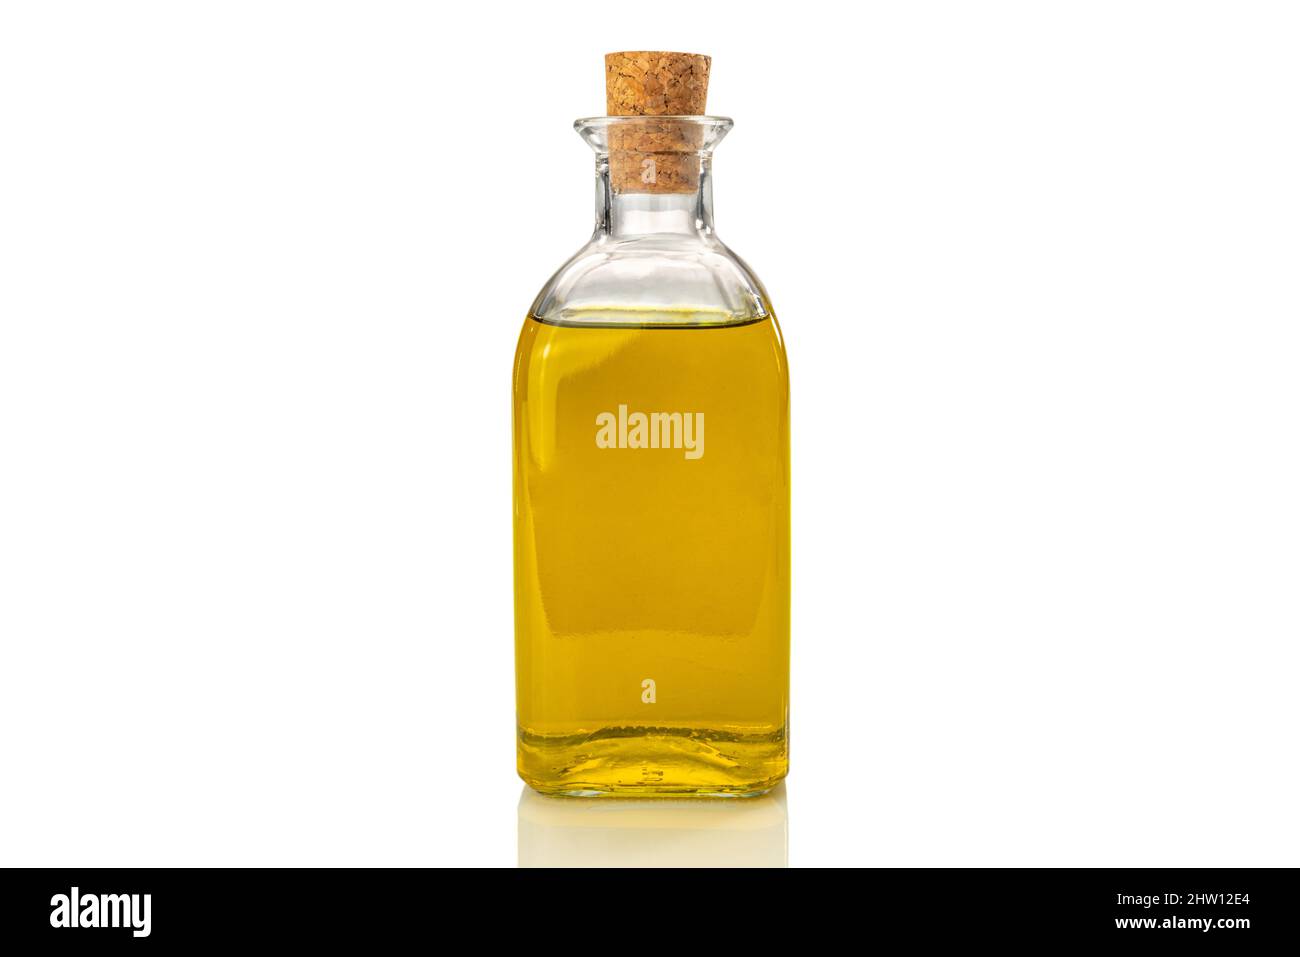 Acido solforico bottiglia Foto stock - Alamy